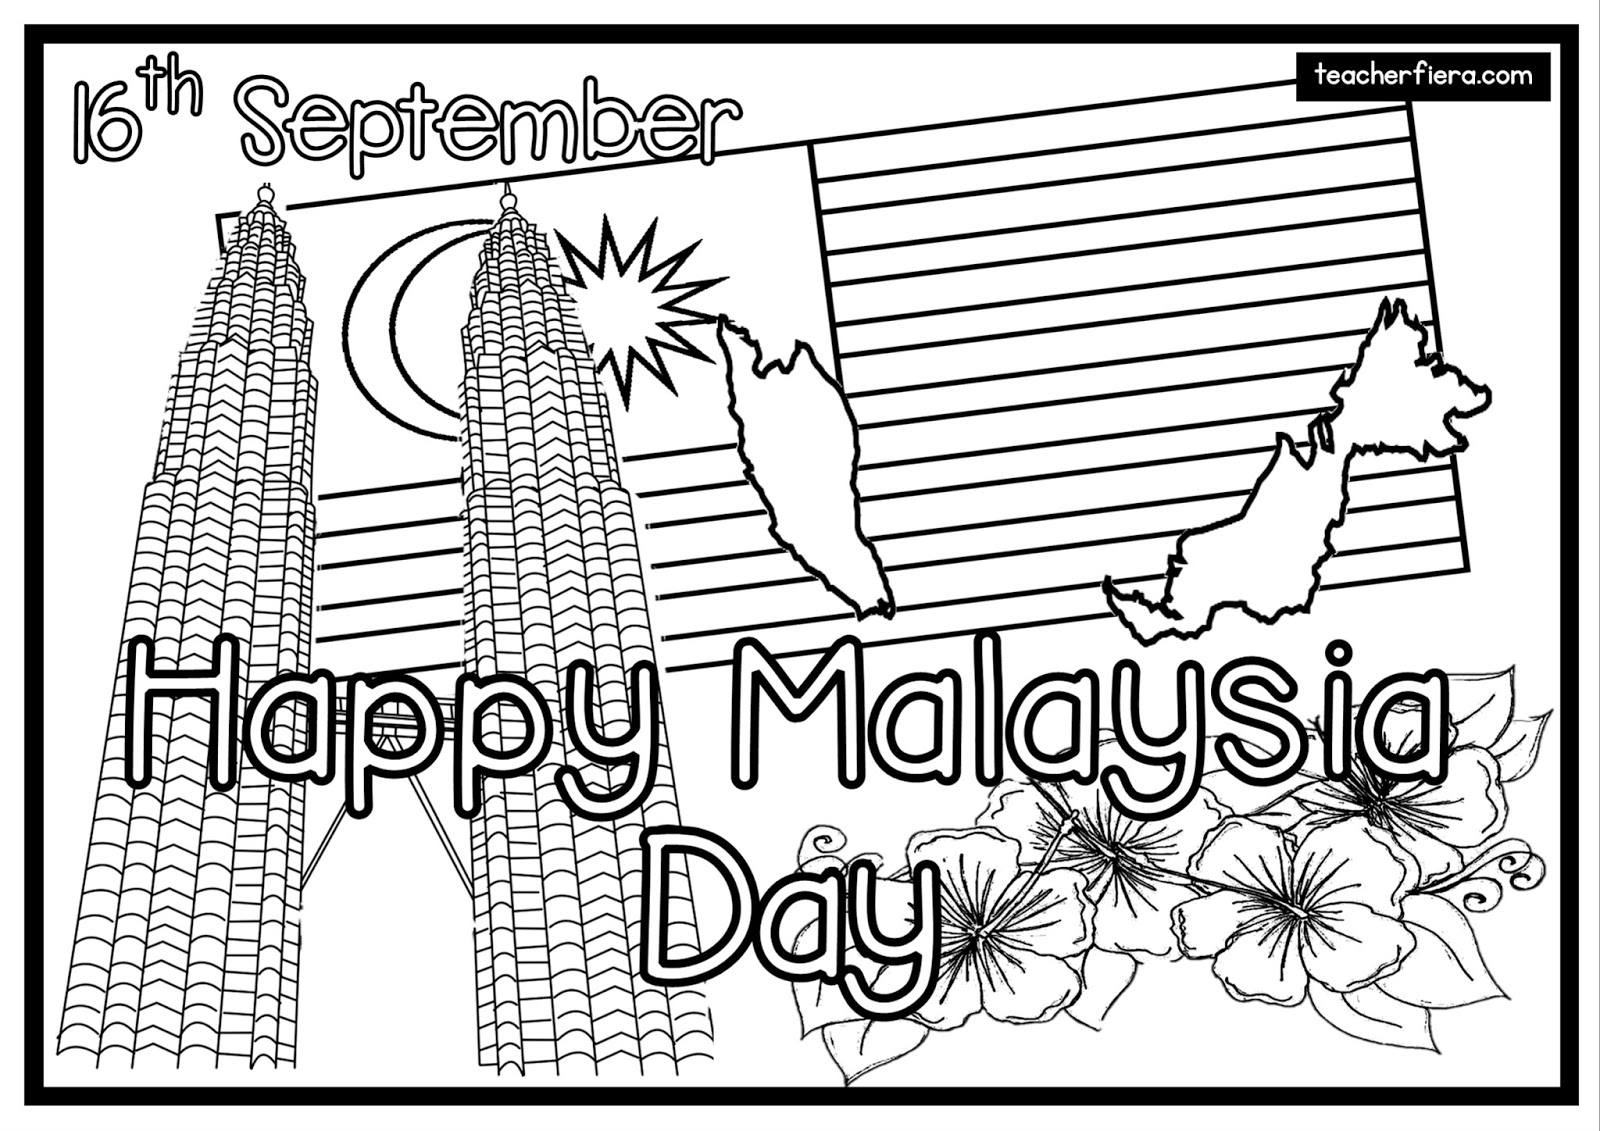 teacherfiera.com: HAPPY MALAYSIA DAY 16TH SEPTEMBER (COLOURING SHEETS)